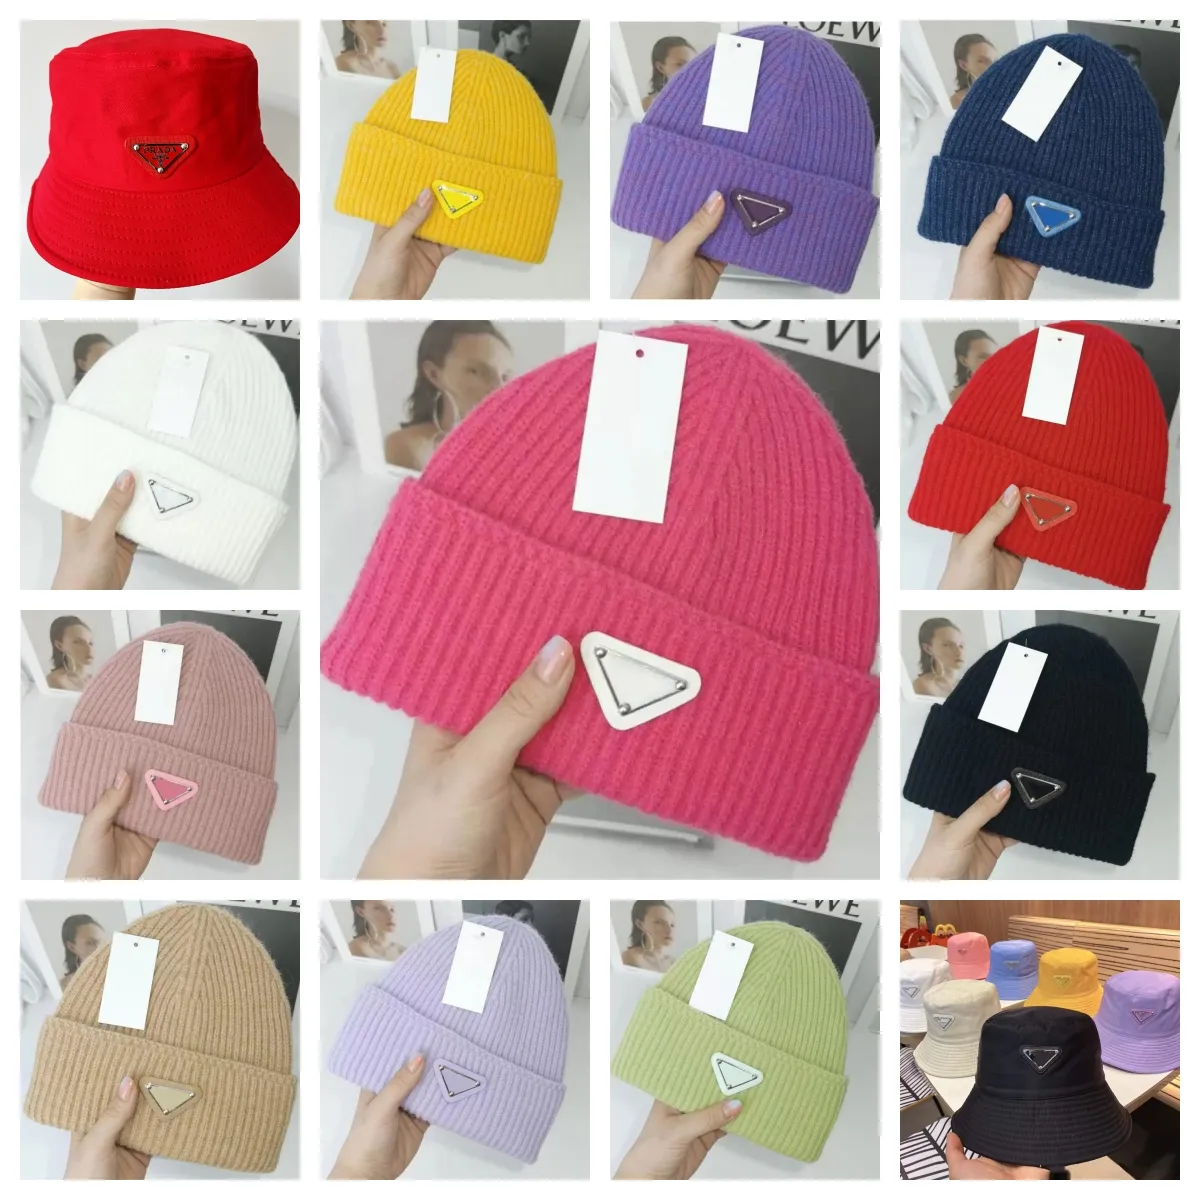 New Woman hat designer baseball cap bucket hats Autumn and Winter letters embroidered adjustable multi color solid men women hip hop new era cap